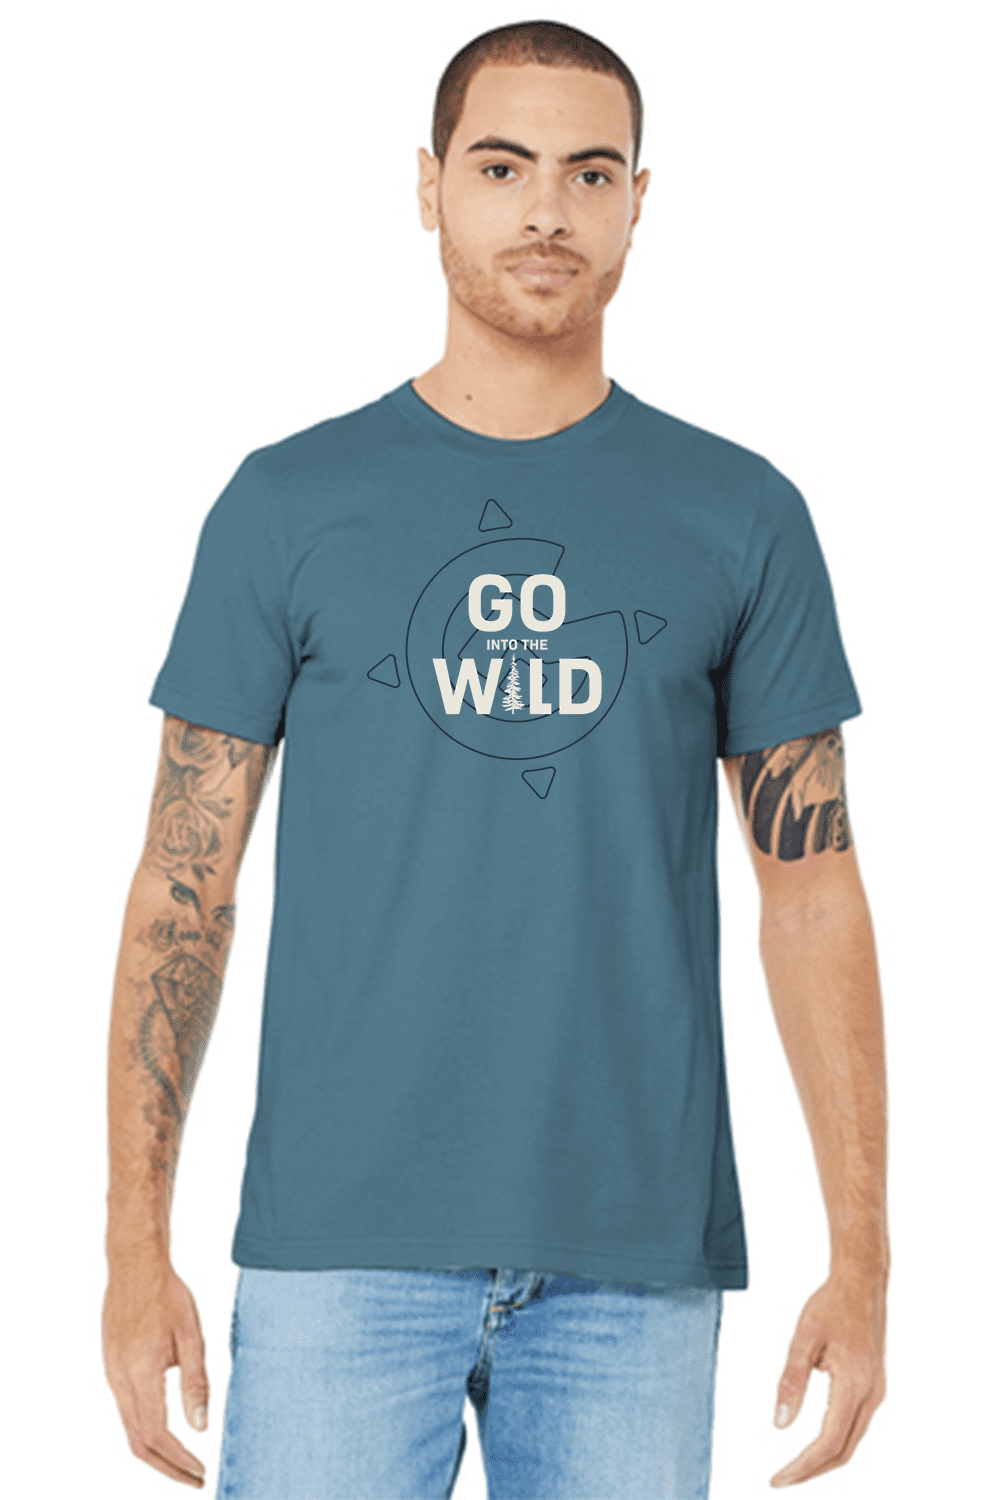 GO into the WILD T-Shirt - Grava Adventure Corporation